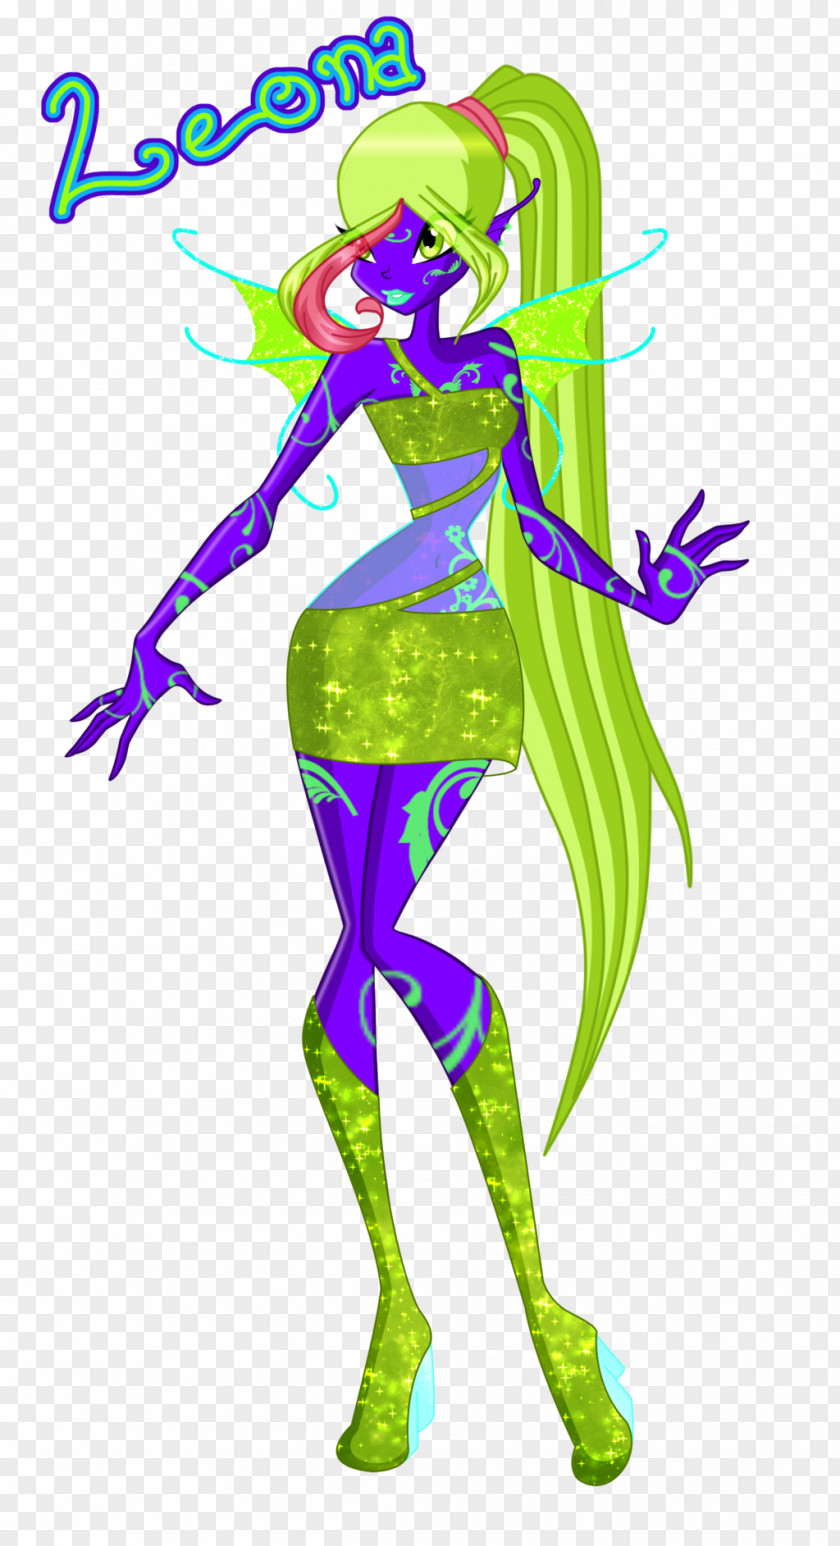 Fairy Writing Illustration Costume Cartoon Supervillain Legendary Creature PNG